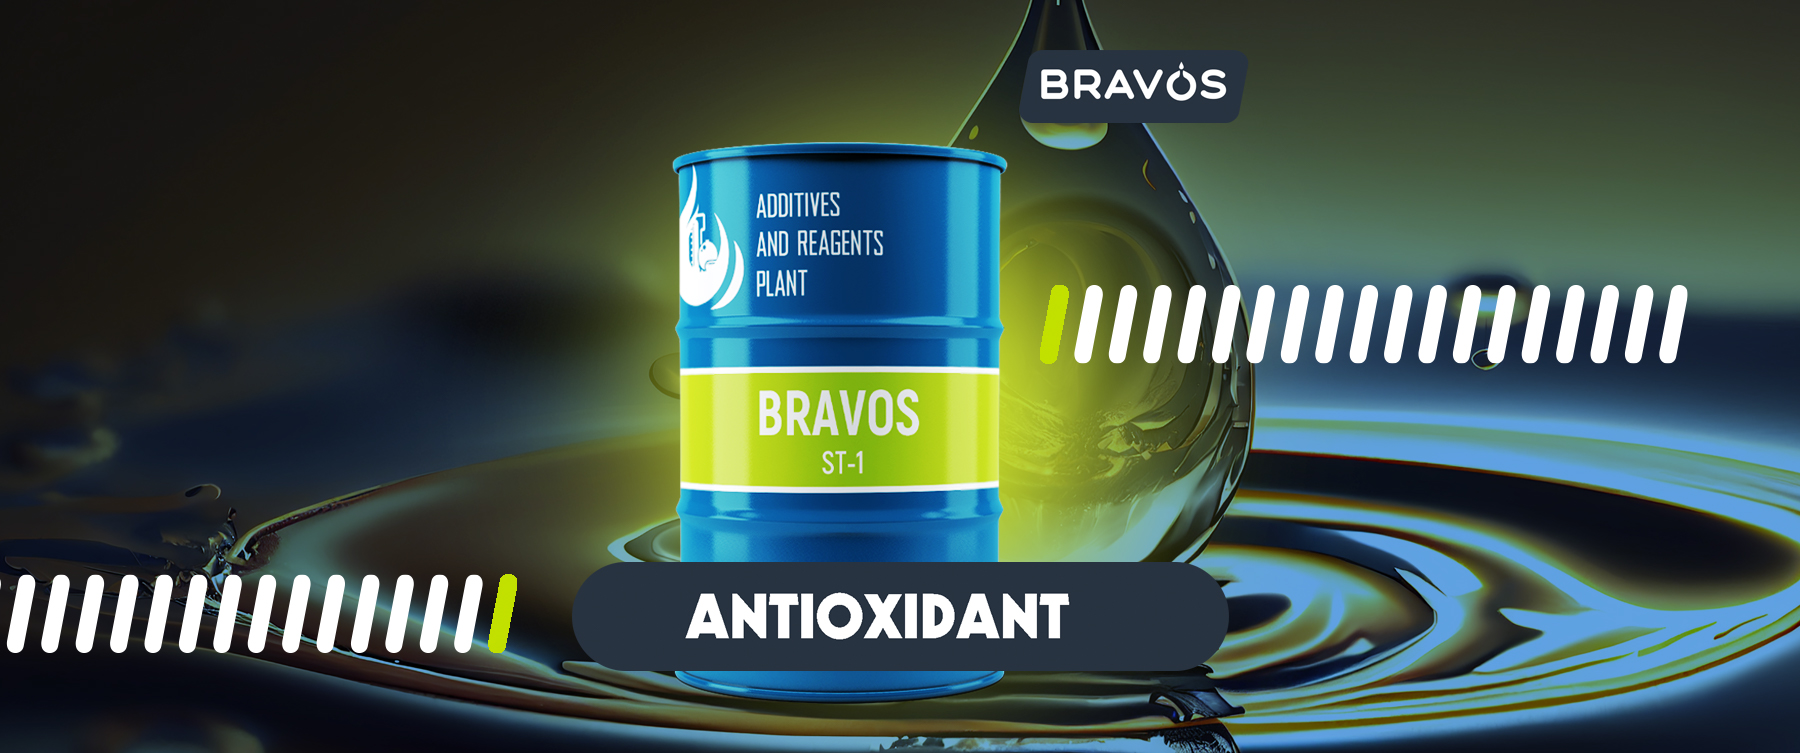 BRAVOS ST-1 HIGH PERFORMANCE ANTIOXIDANT